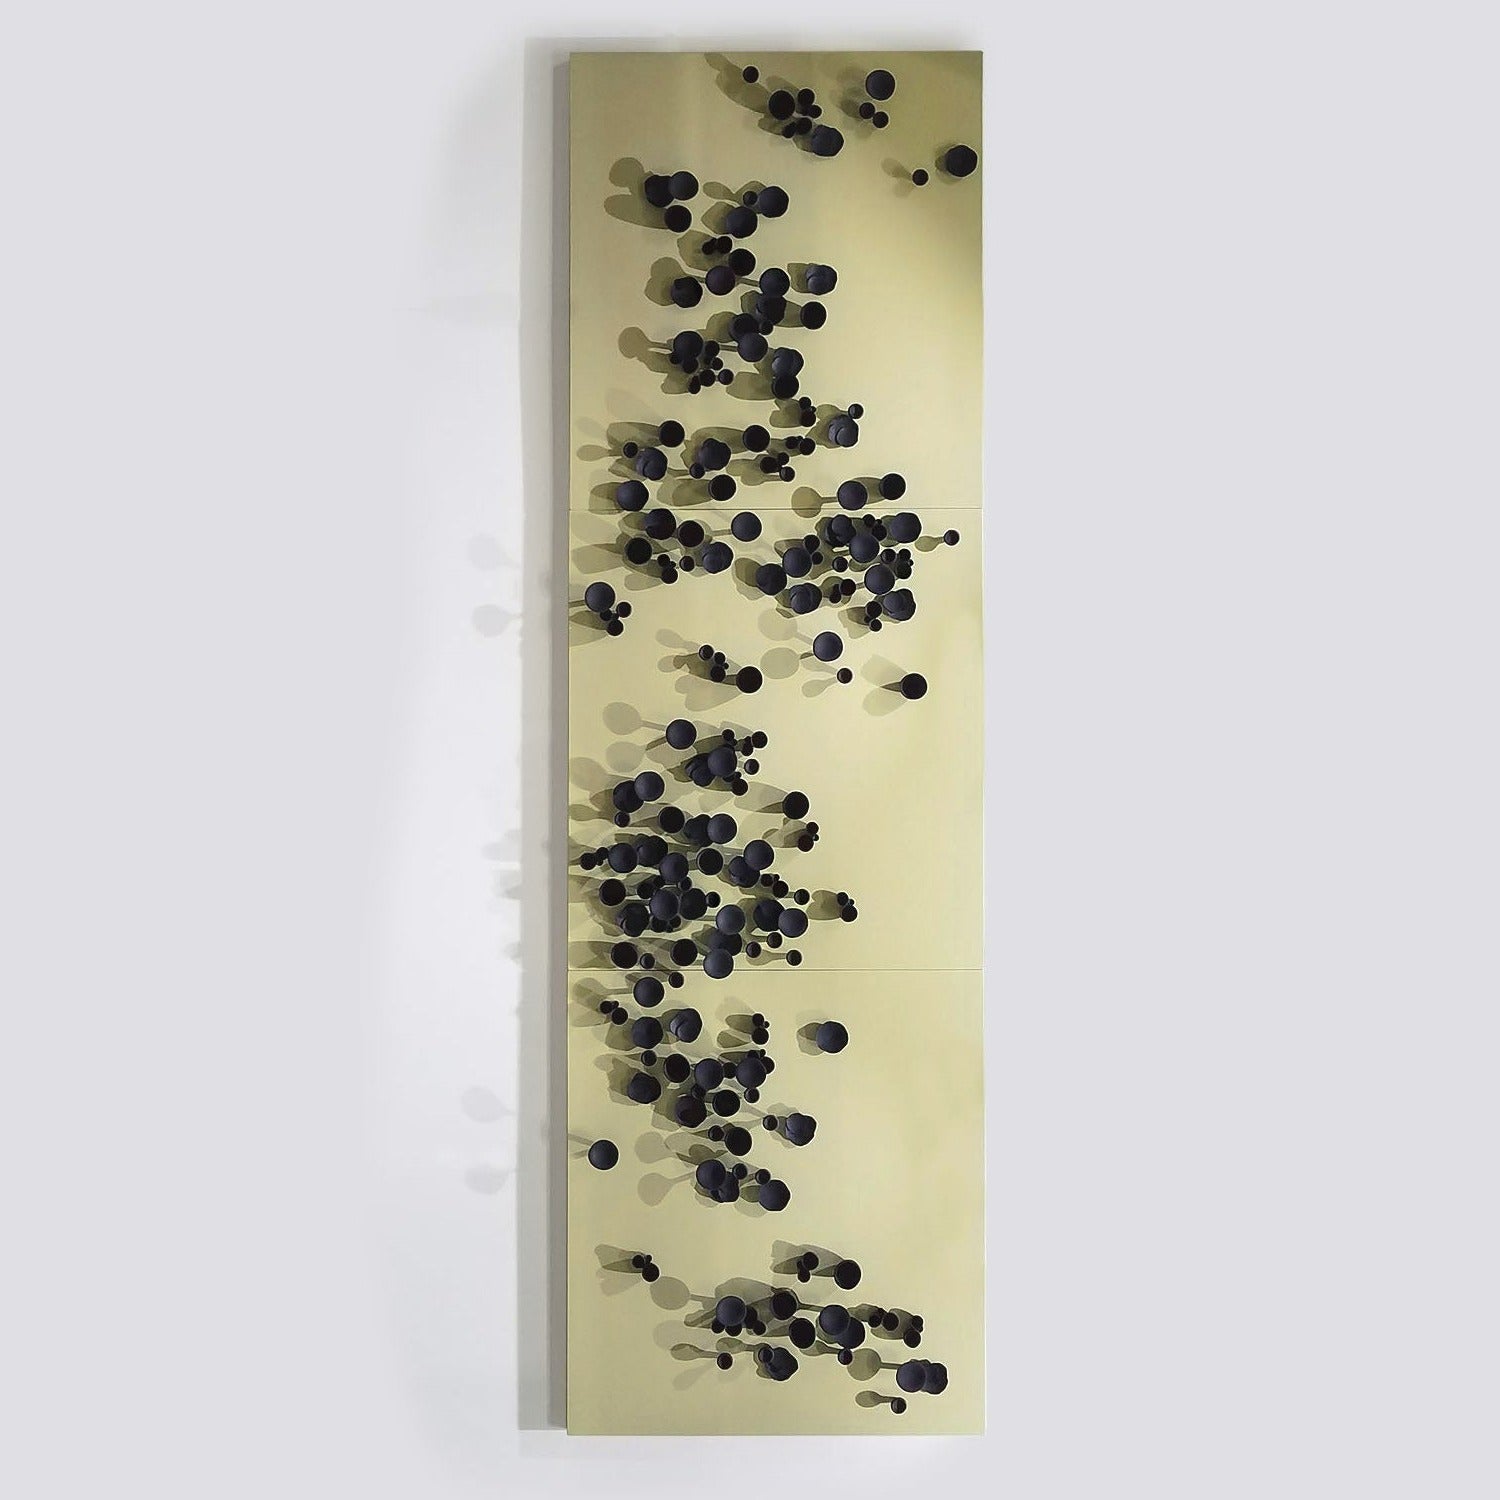 Wall Play™: Lichen, Black